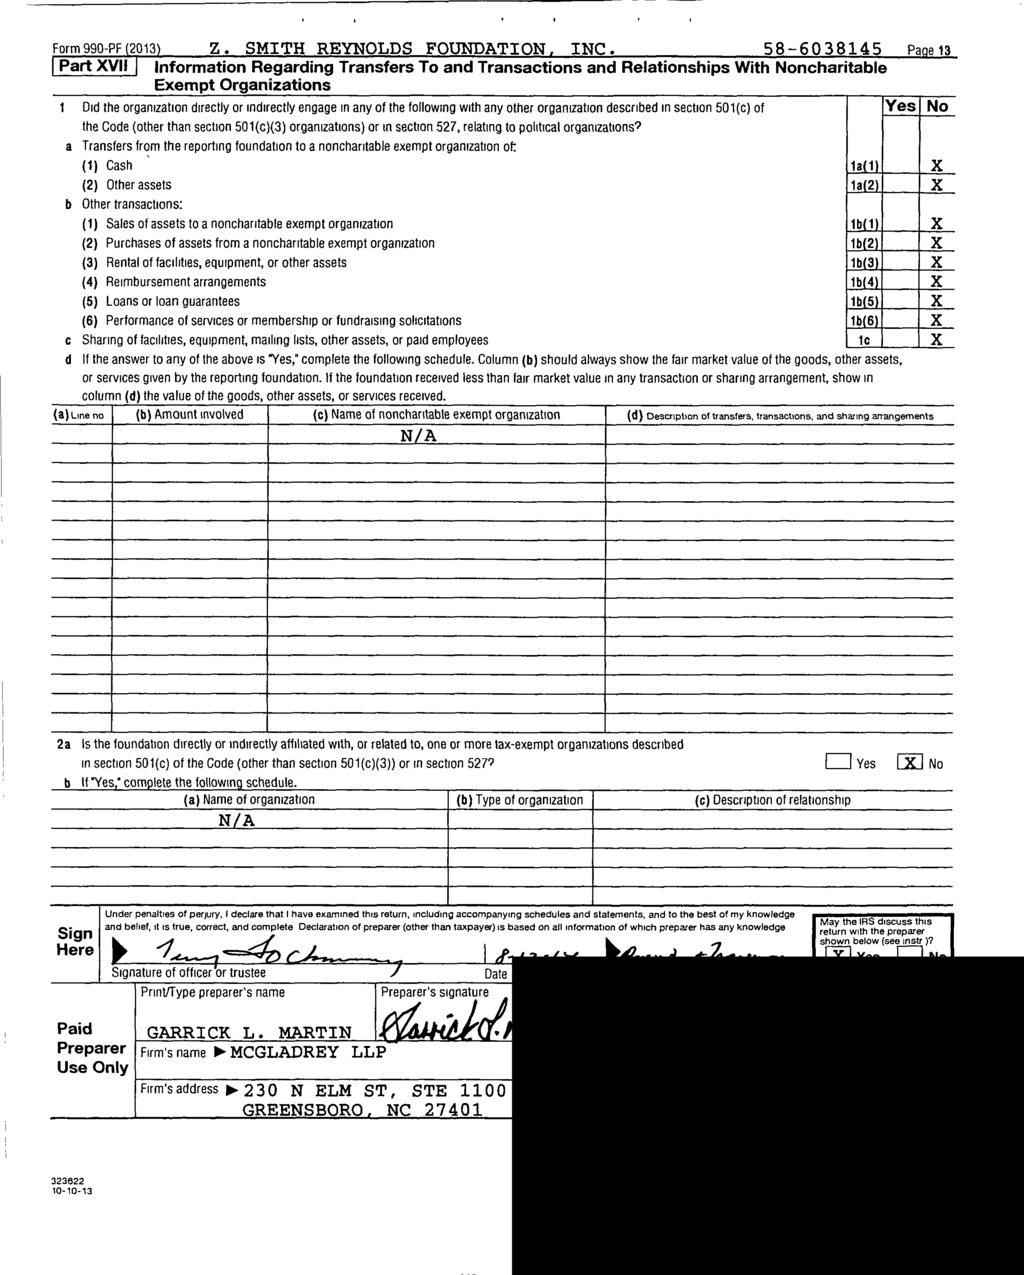 Form 990-PF 2013 Z. SMITH REYNOLDS FOUNDATION, INC.